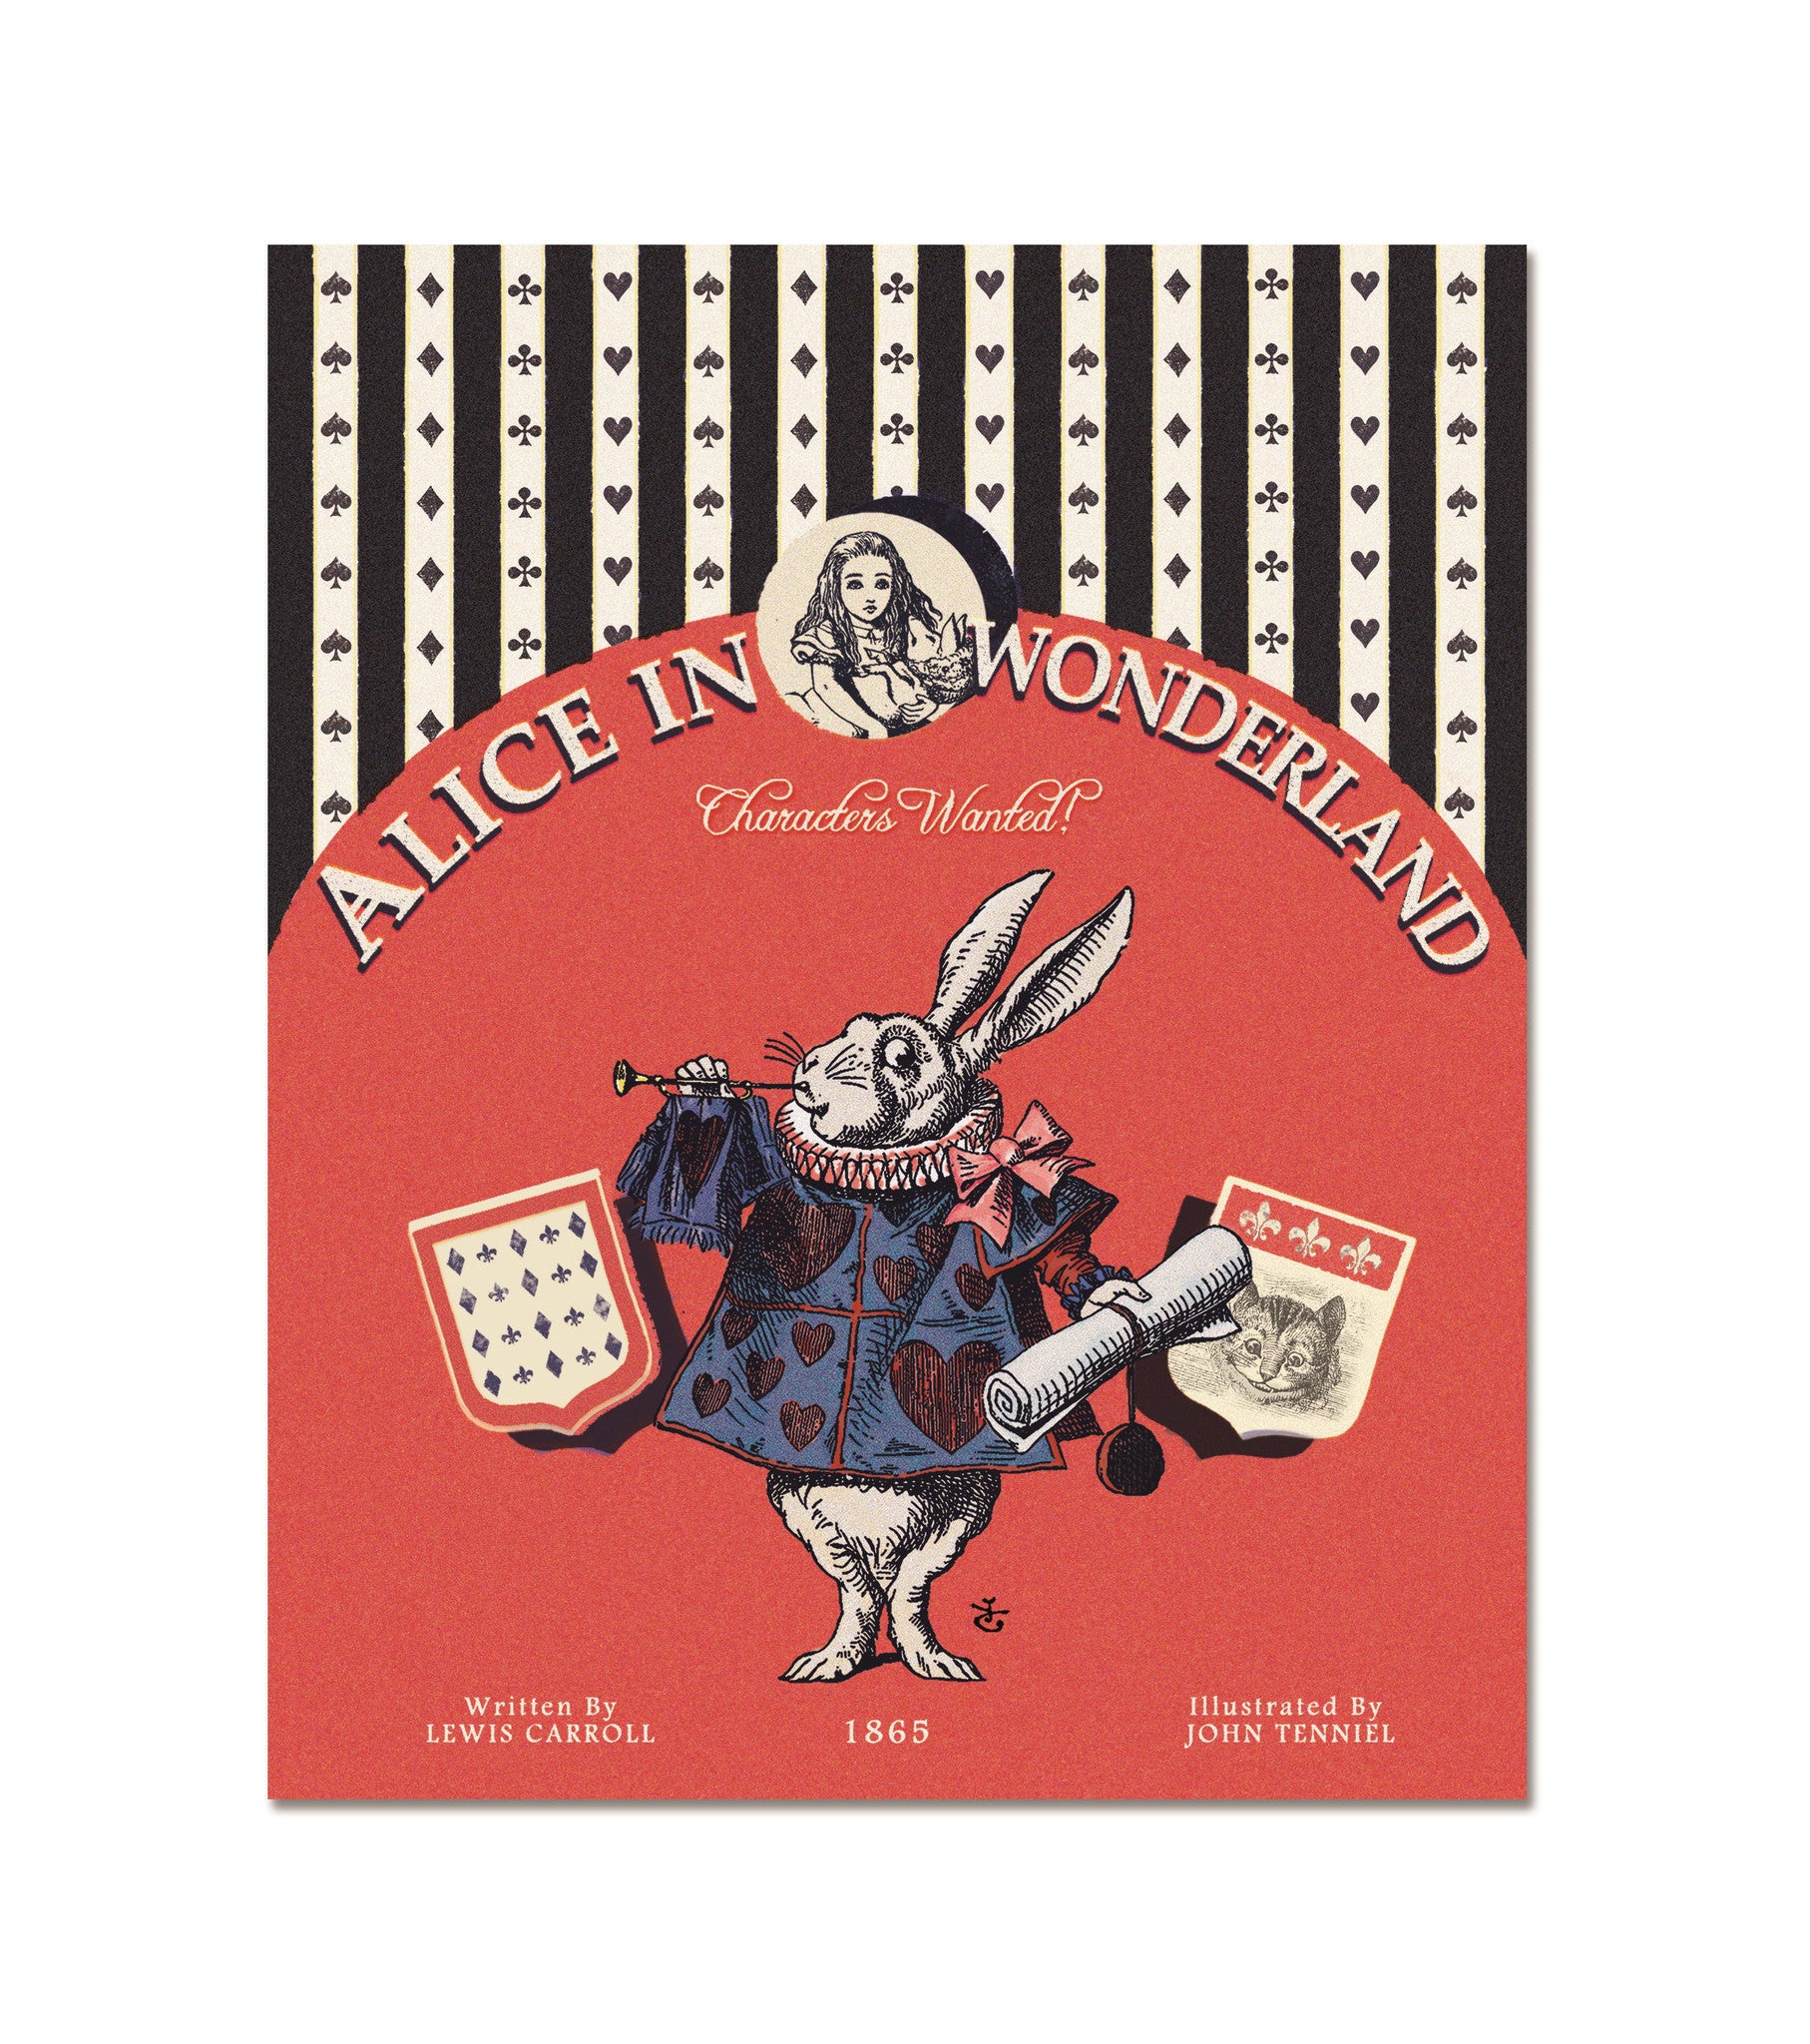 alice in wonderland original illustrations white rabbit